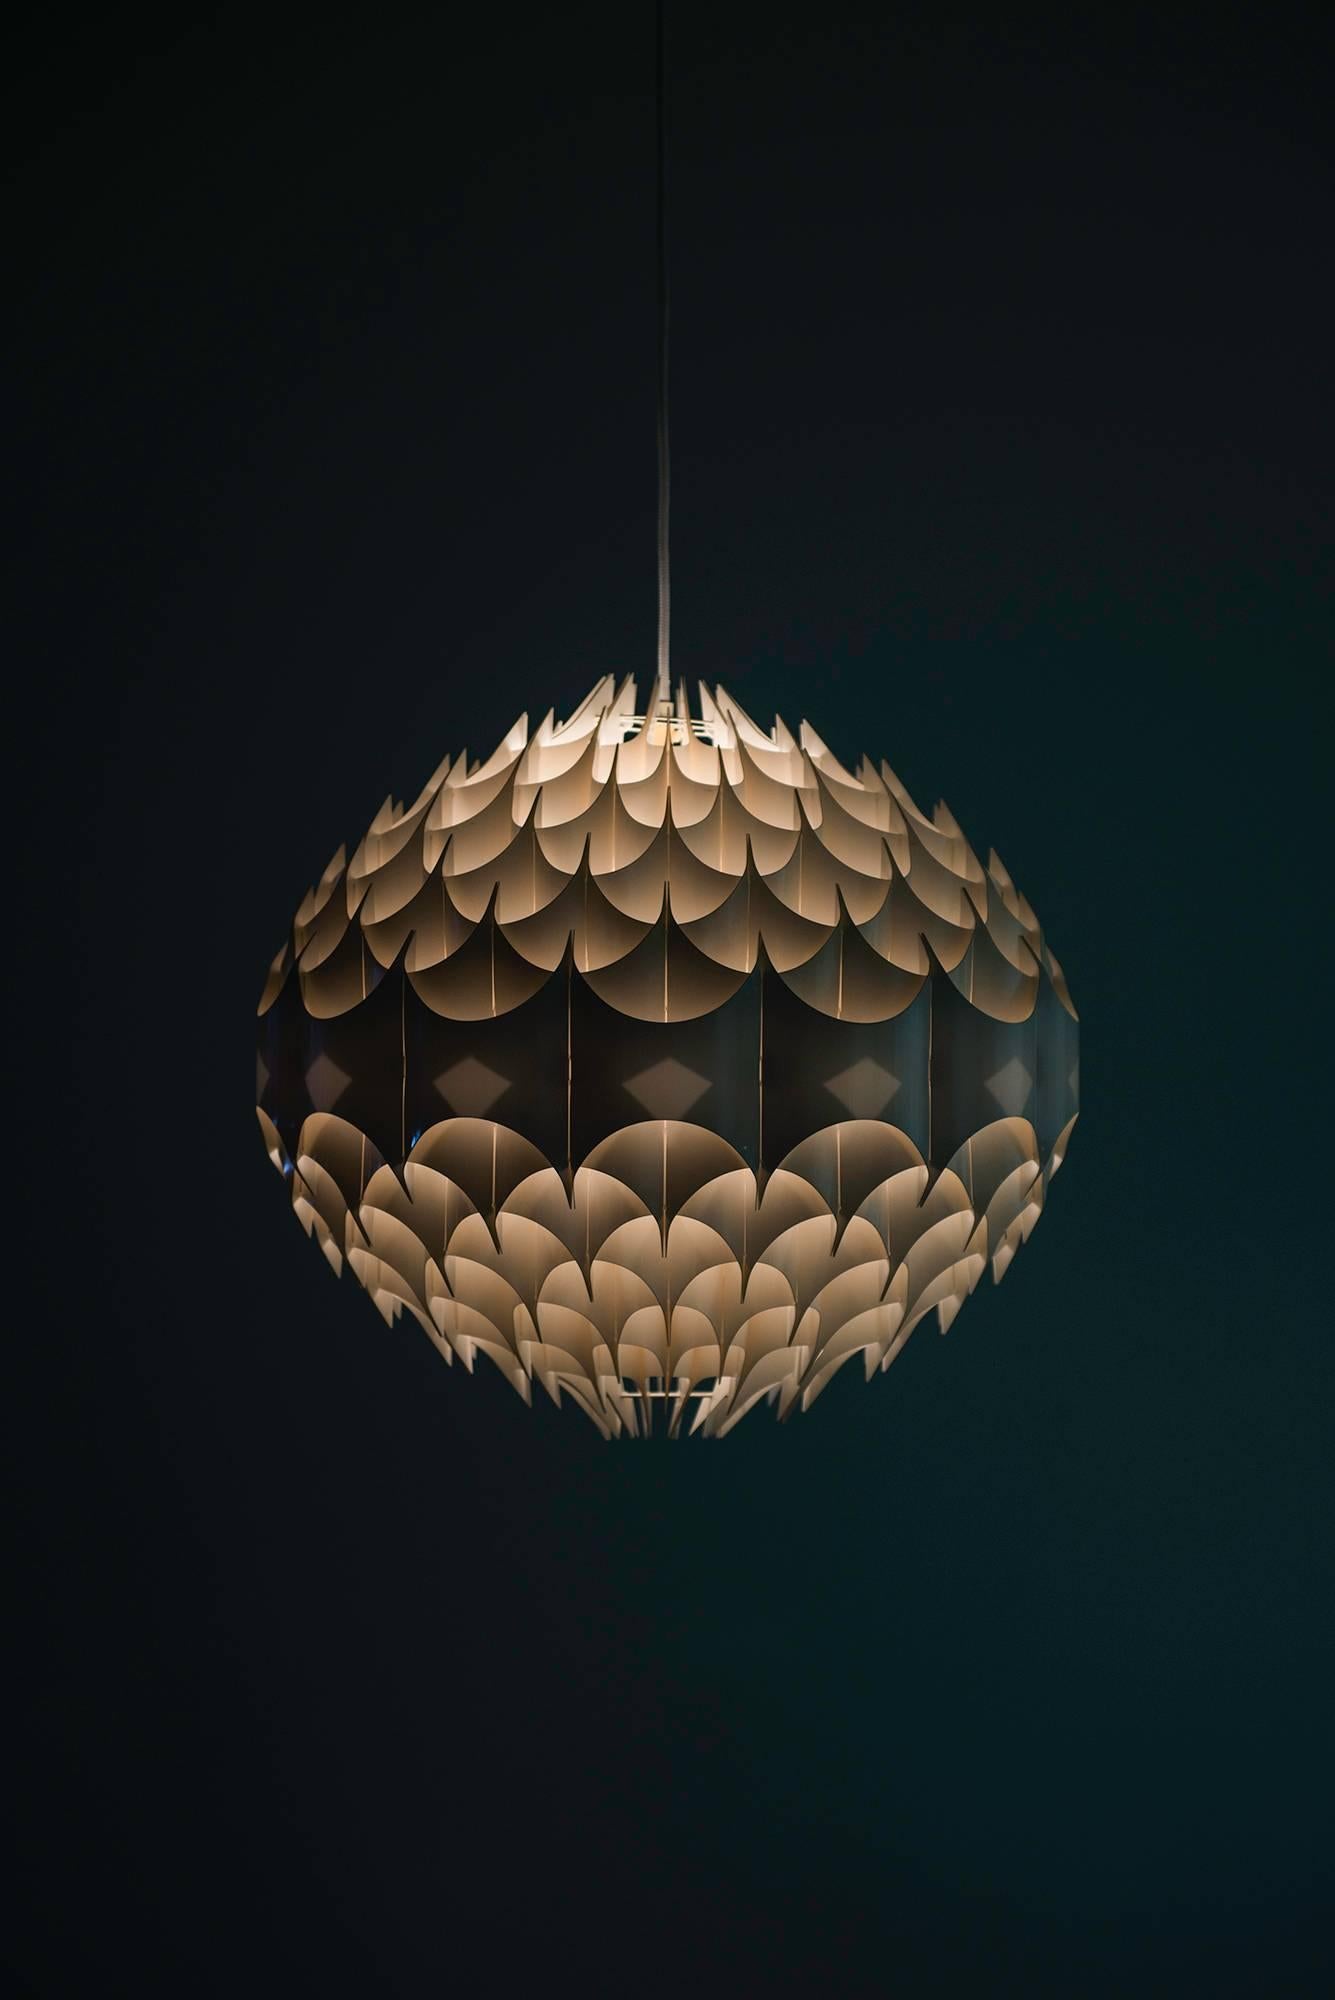 Ceiling lamp model Rhythmic designed by Havlova Milanda. Produced by Vest in Austria.